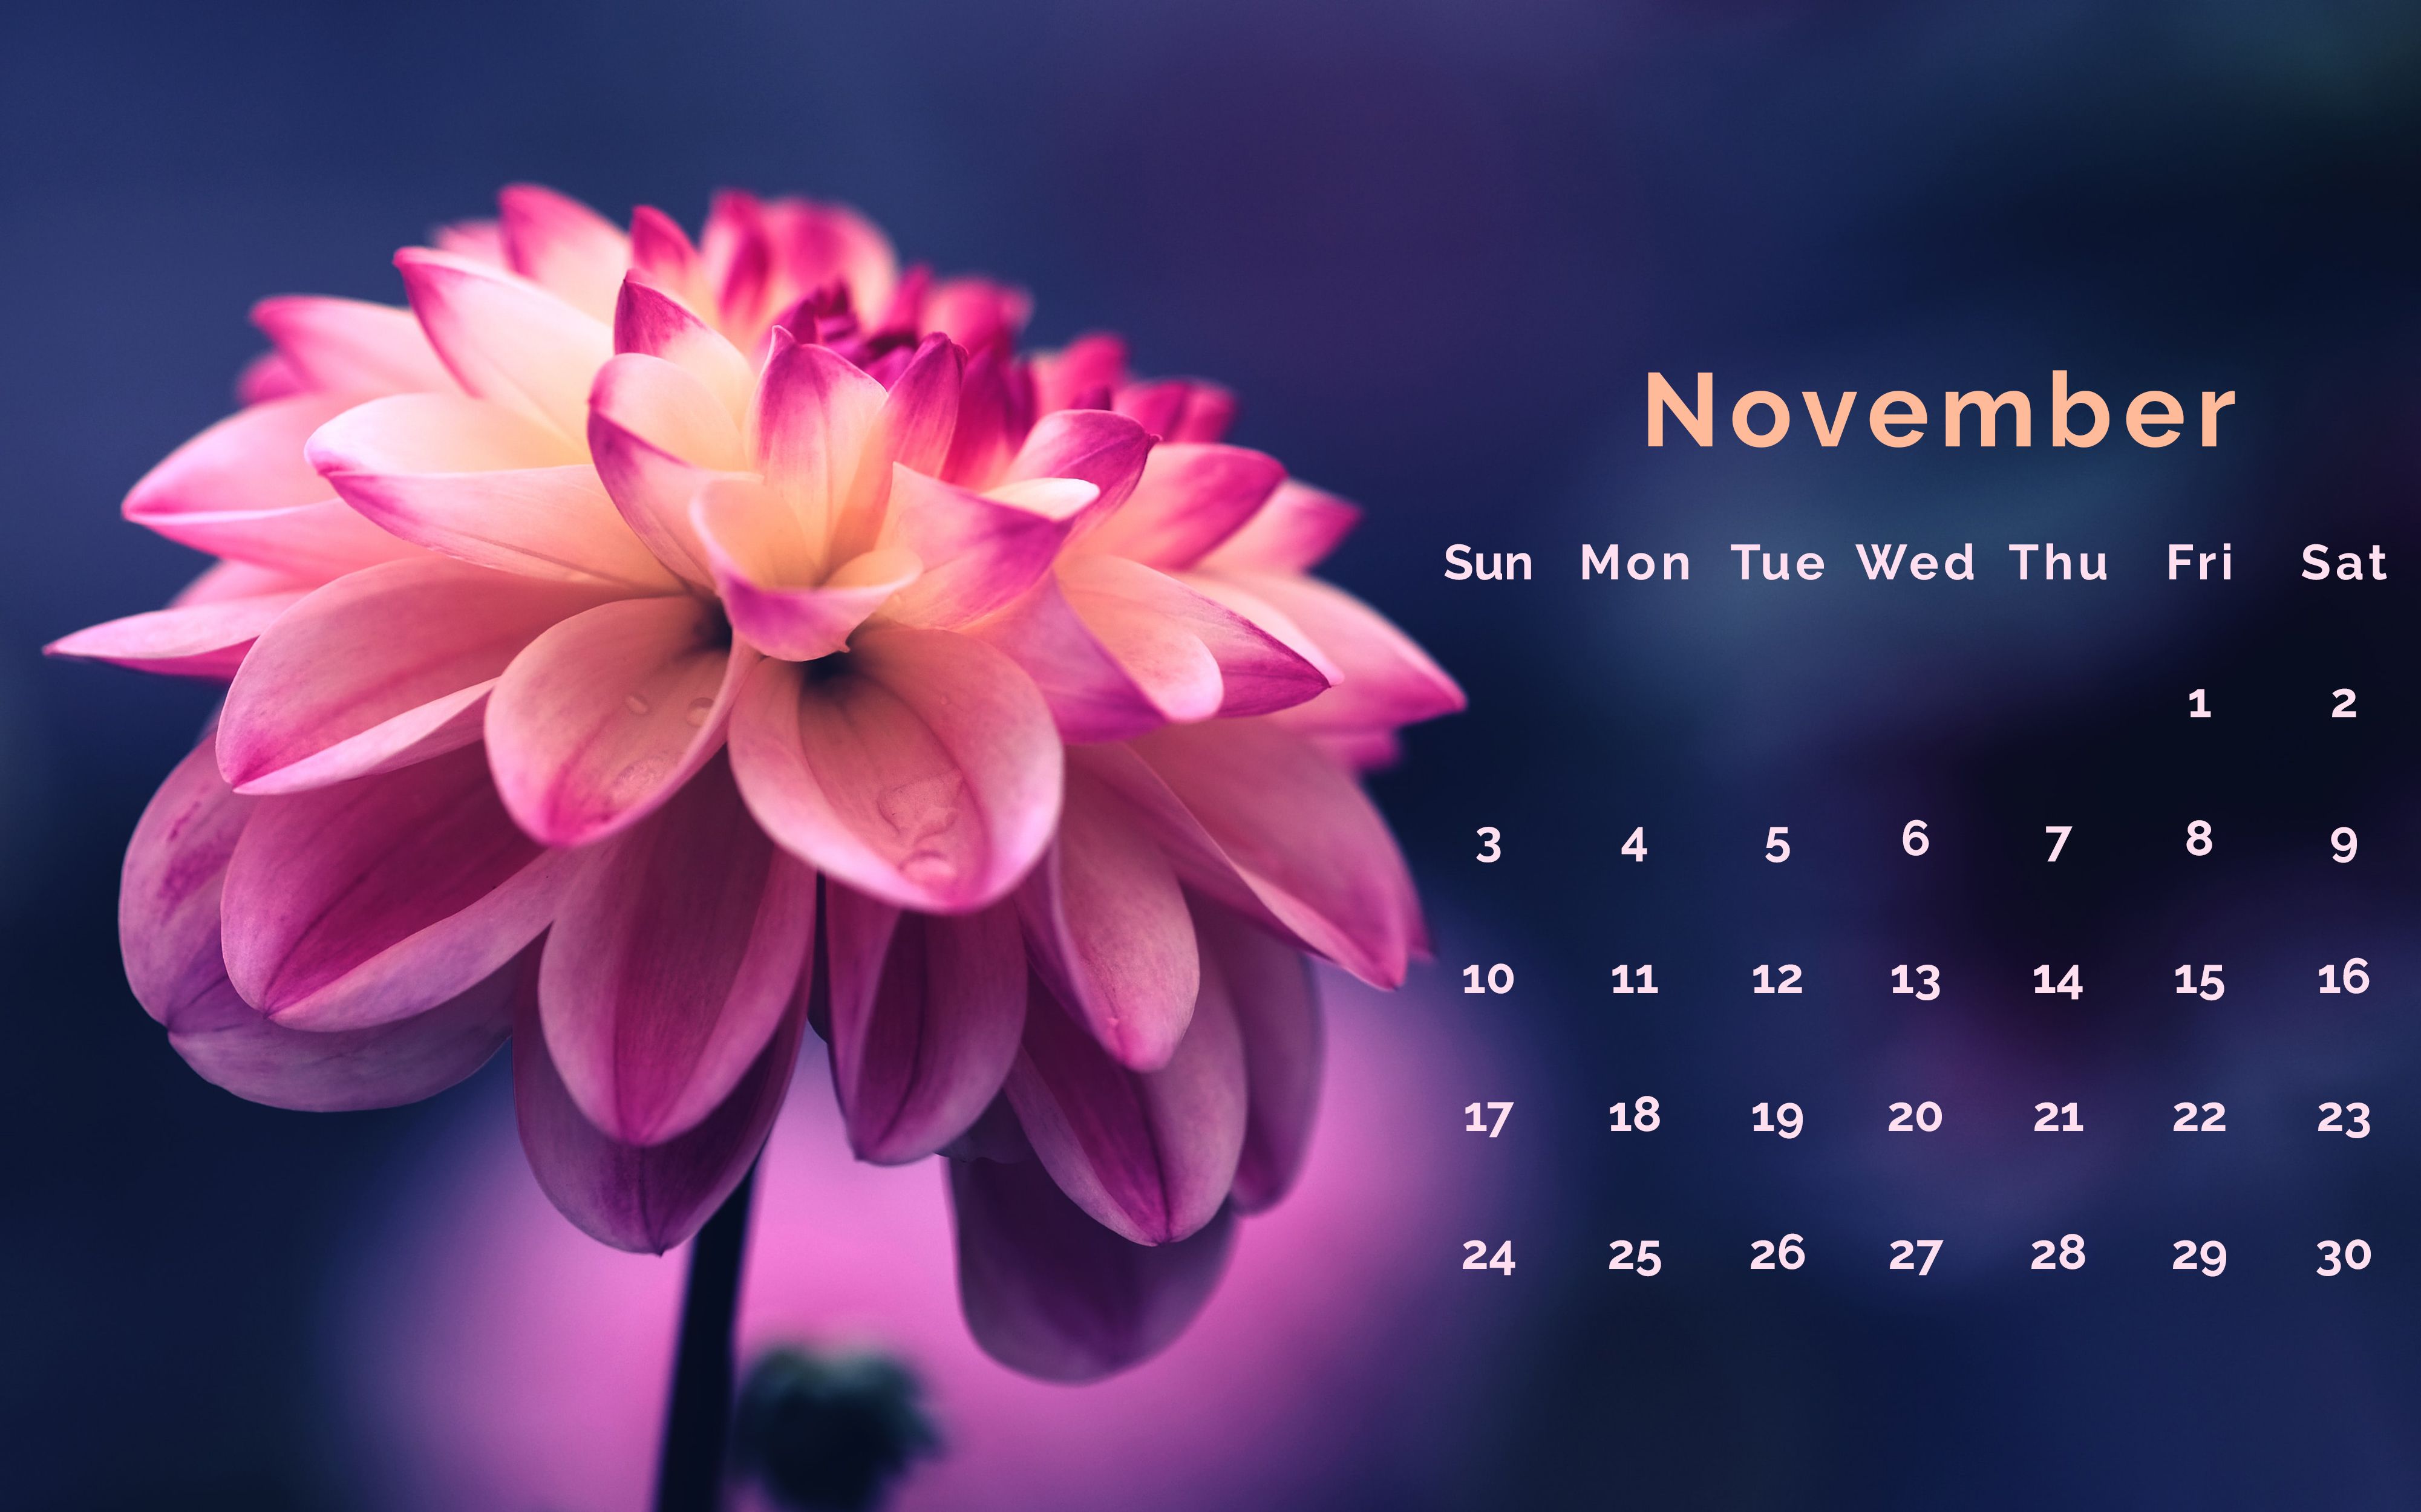 Floral November 2019 Desk Calendar Calendar wallpaper Calendar